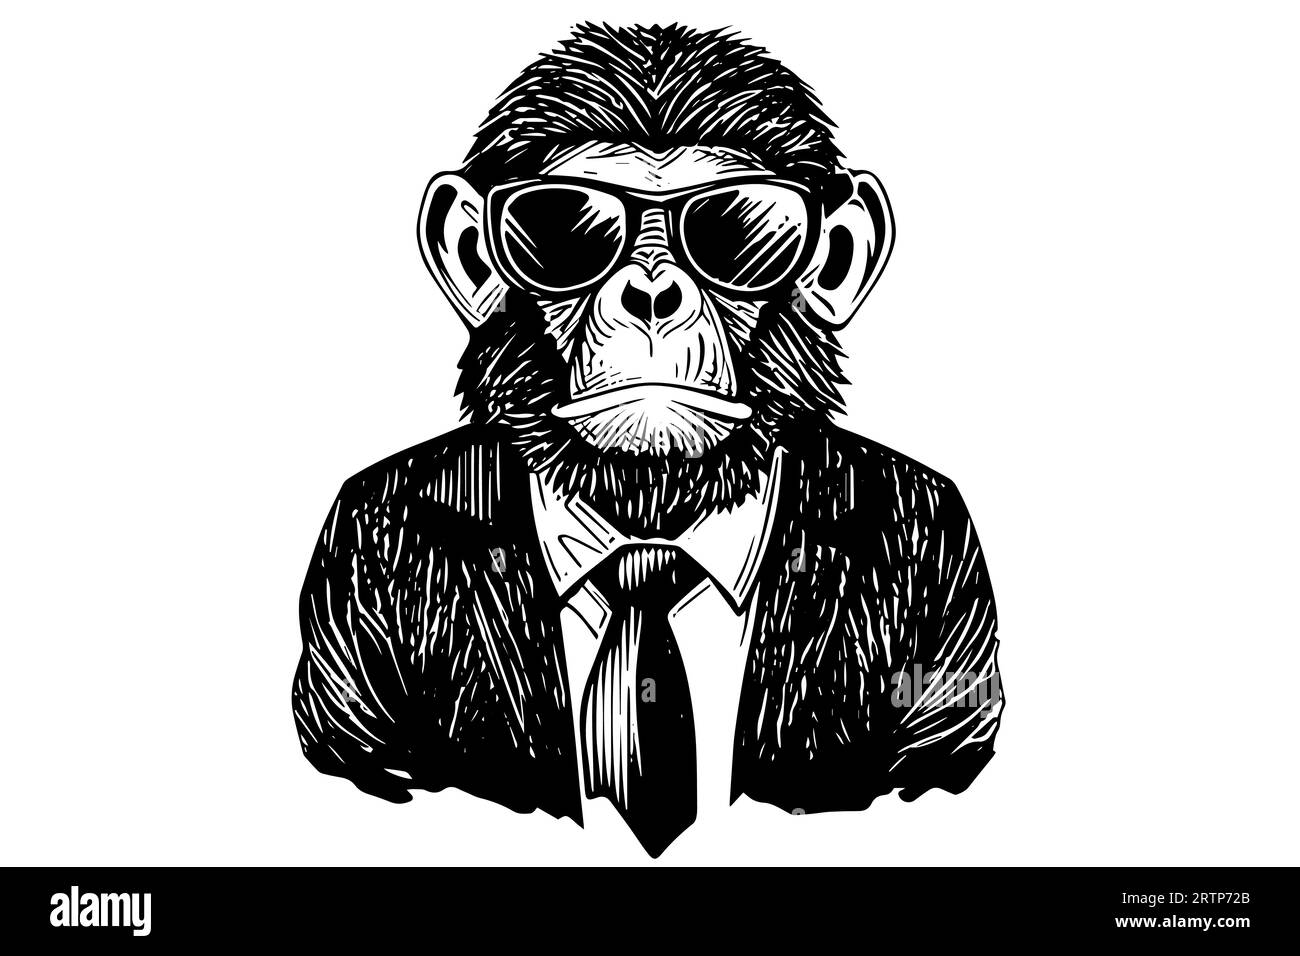 Monkey businessman dressed. Vector engraving style sketch illustration. Stock Vector